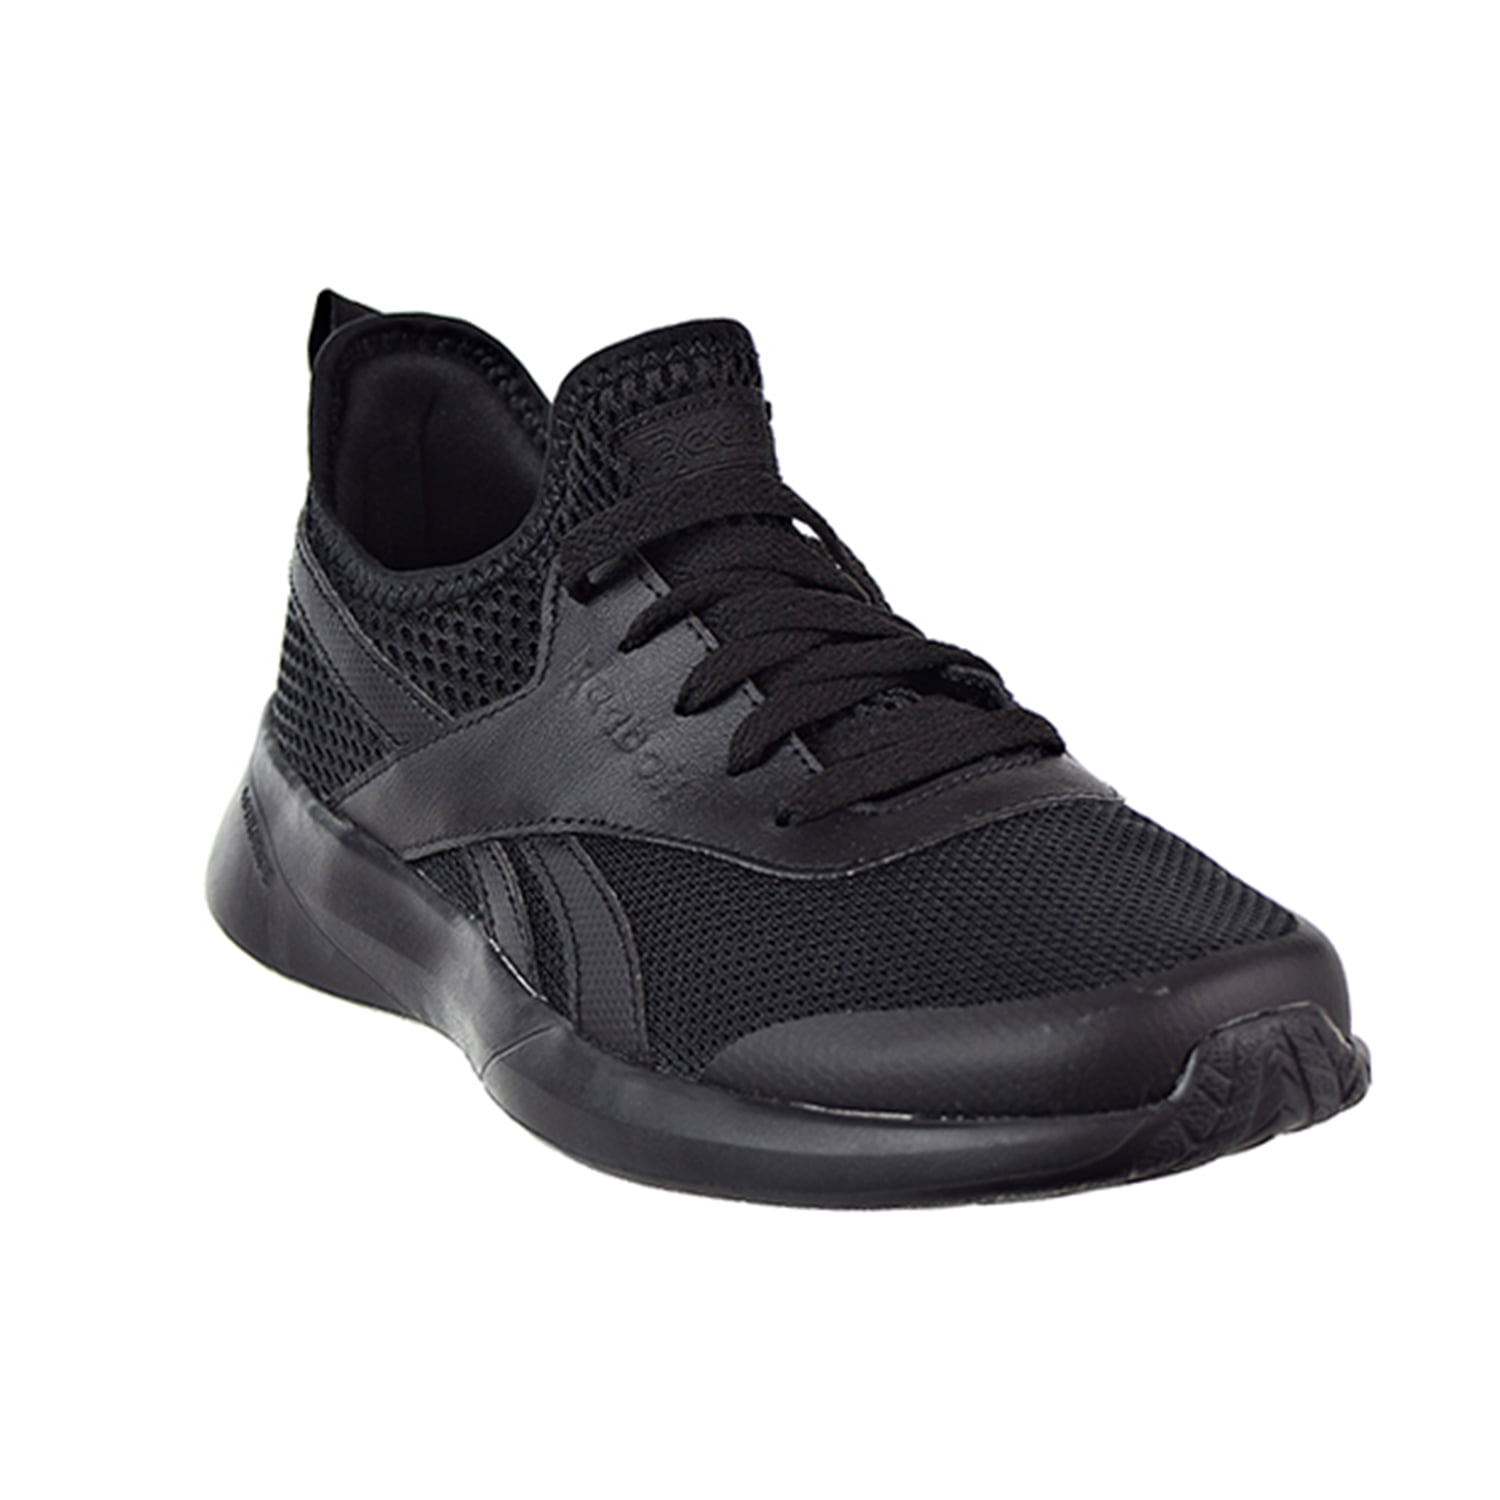 Reebok - Reebok Royal EC Ride 2 Unisex Shoes Black cm9368 - Walmart.com -  Walmart.com